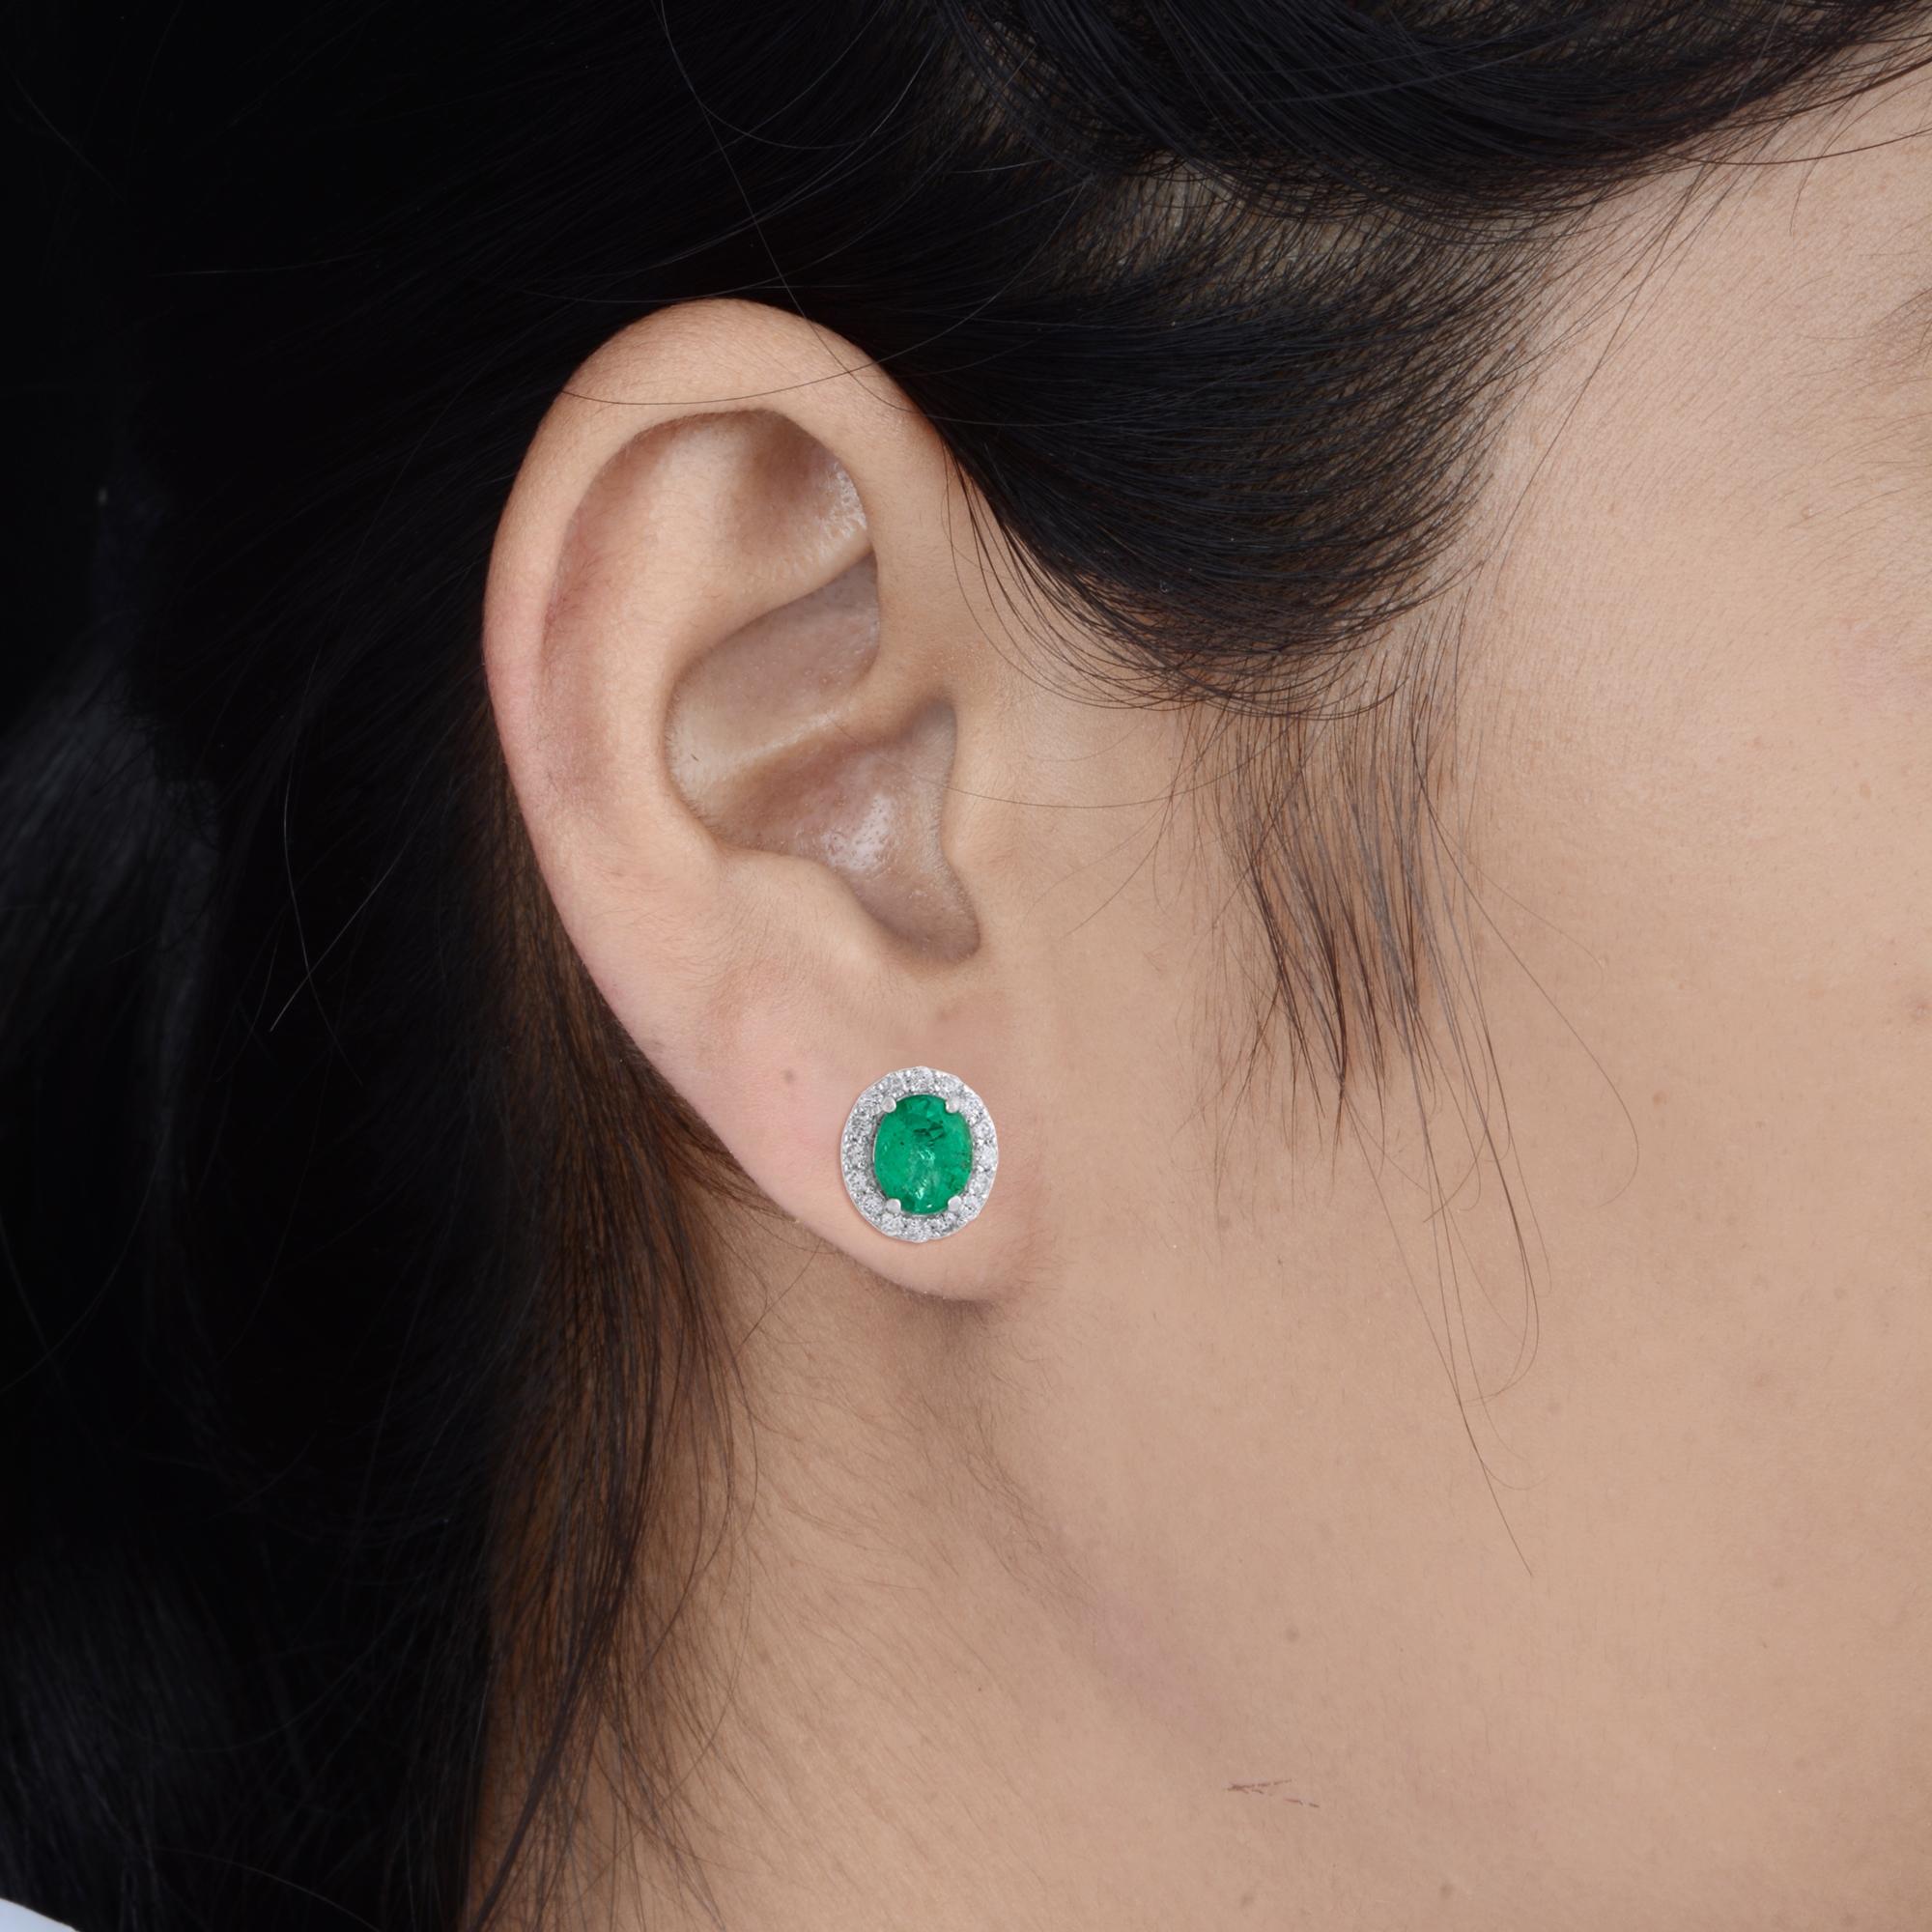 Oval Cut Real Oval Zambia Emerald Gemstone Earrings Diamond 18 Karat White Gold Jewelry For Sale